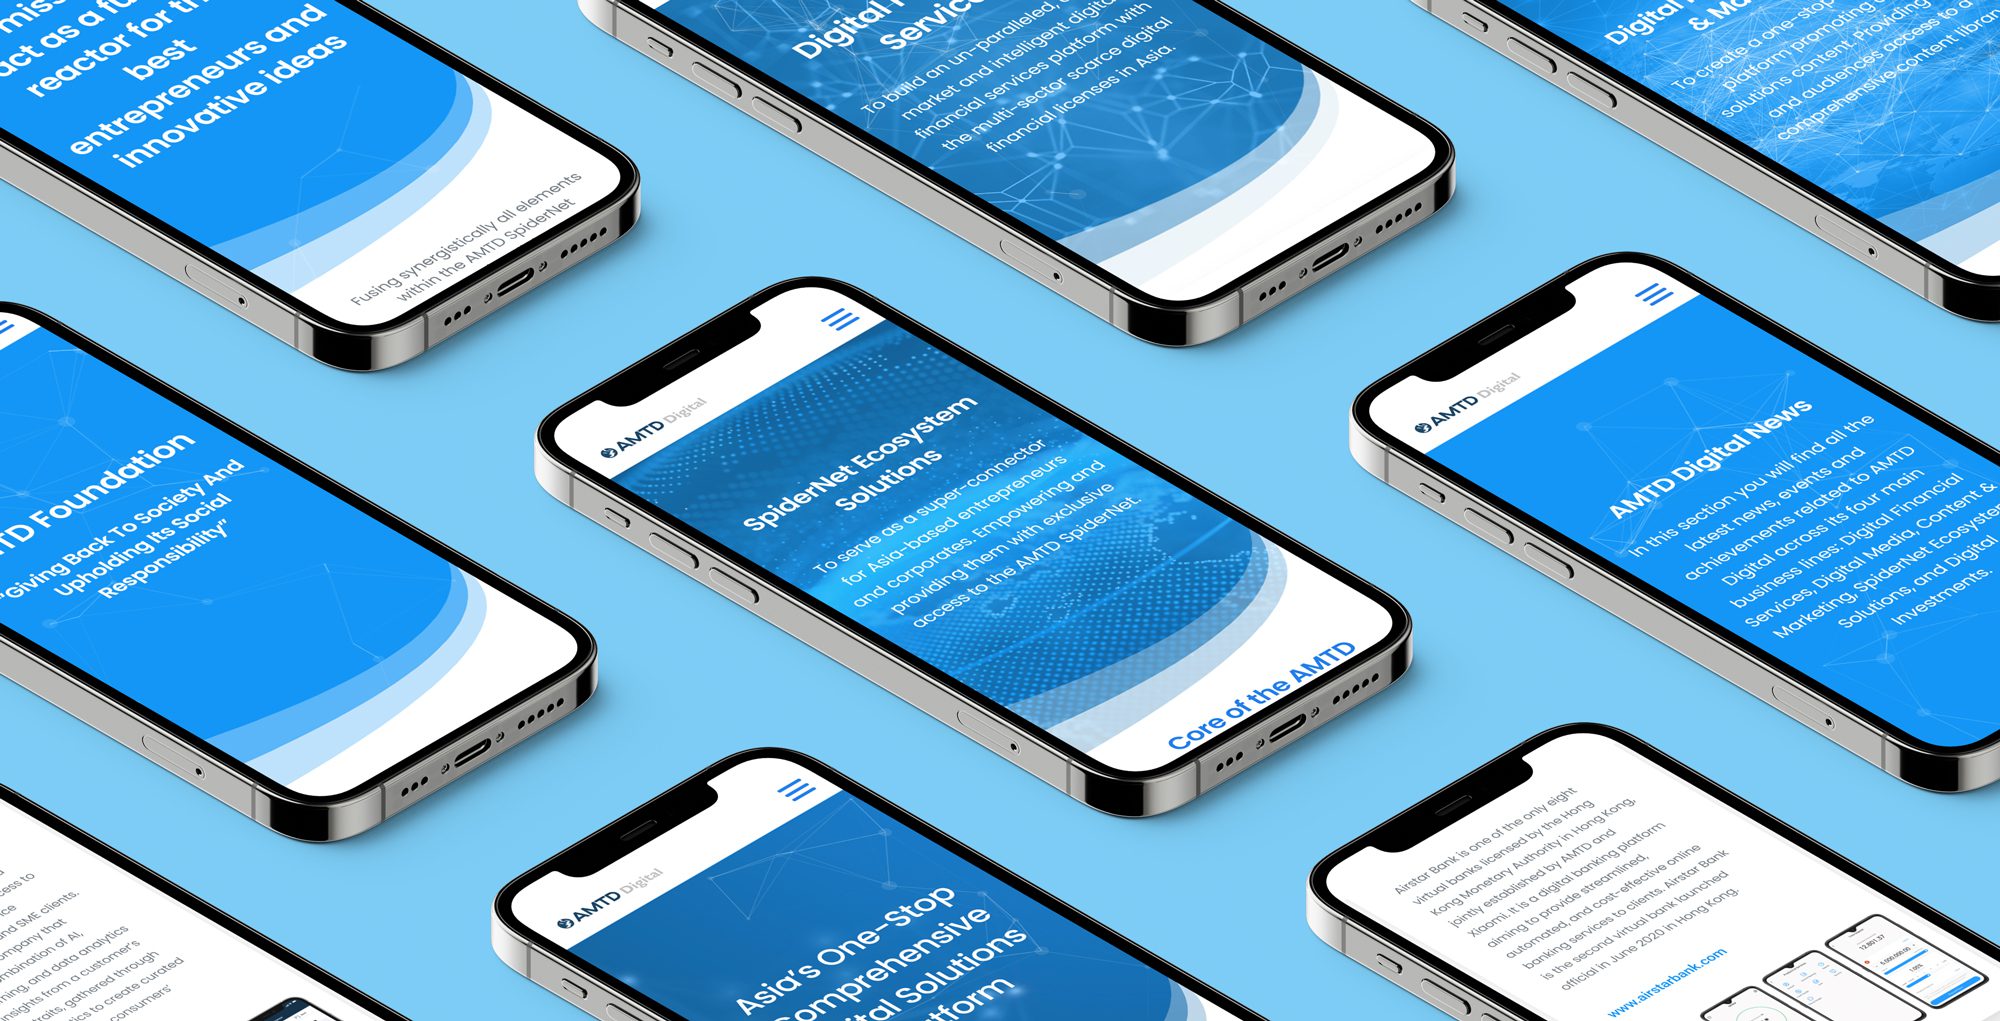 AMTD International website shown on multi phone screens on light blue background